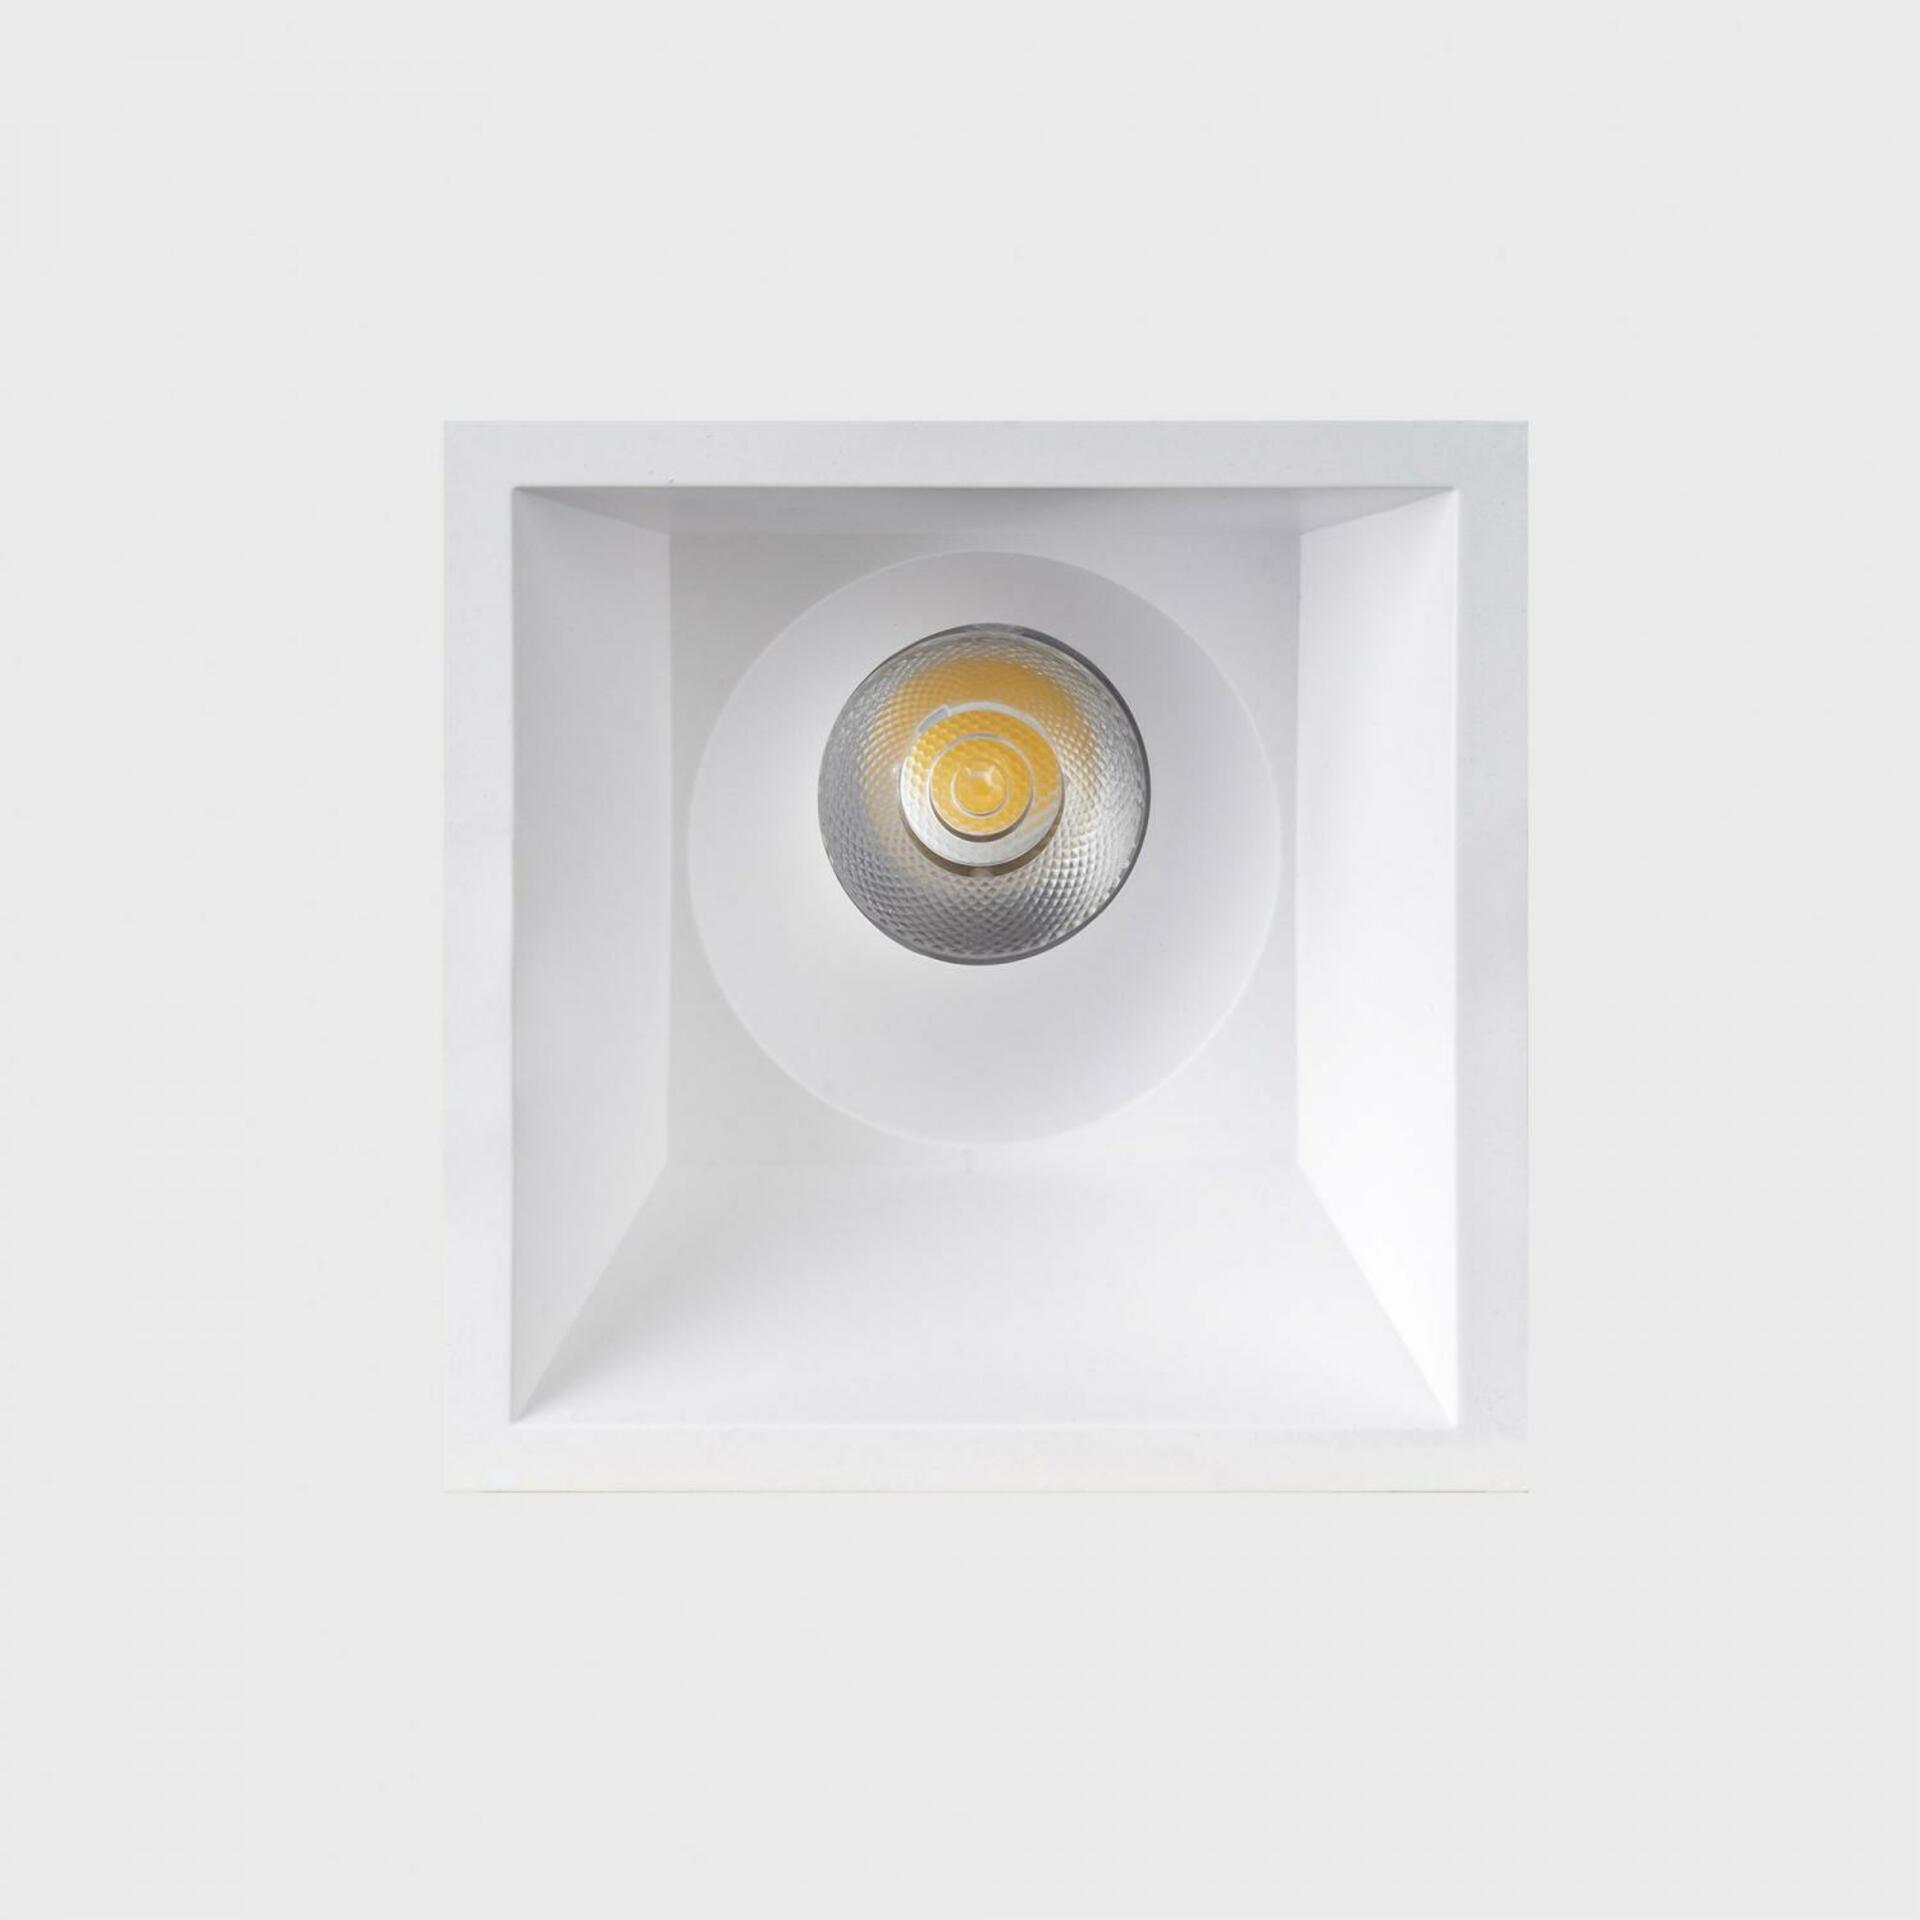 KOHL LIGHTING KOHL-Lighting NOON SQ ASYMETRIC zapuštěné svítidlo s rámečkem 93x93 mm bílá 38° 5 W  CRI 80 3000K PUSH